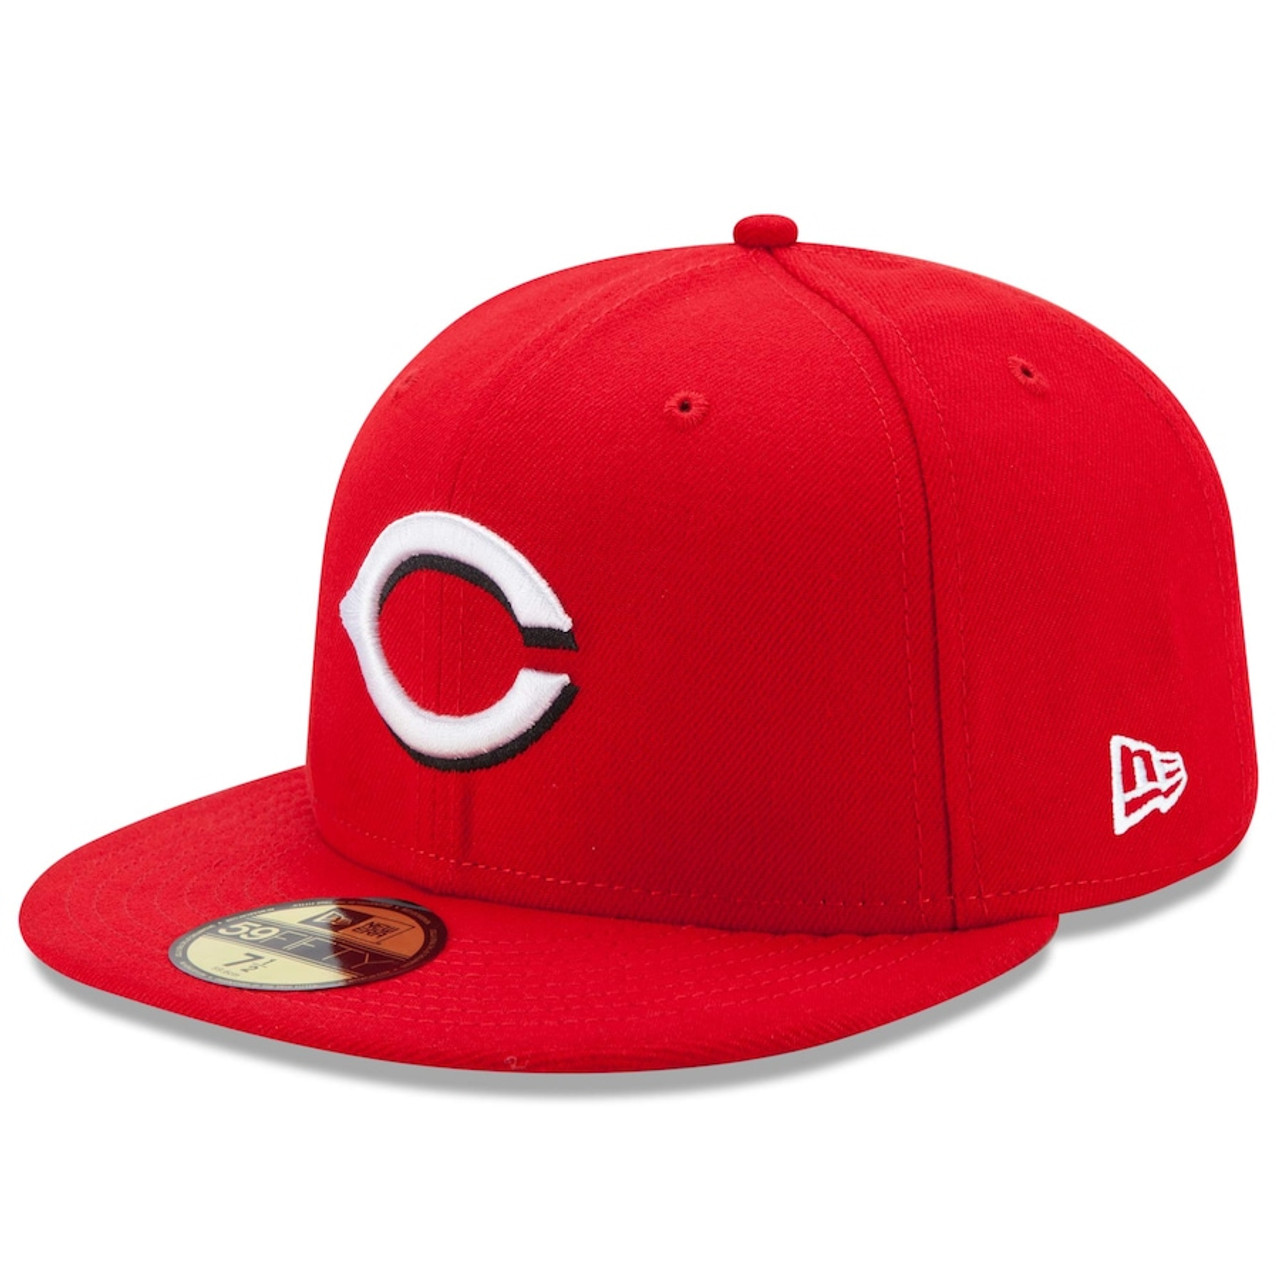 Cincinnati Reds cap